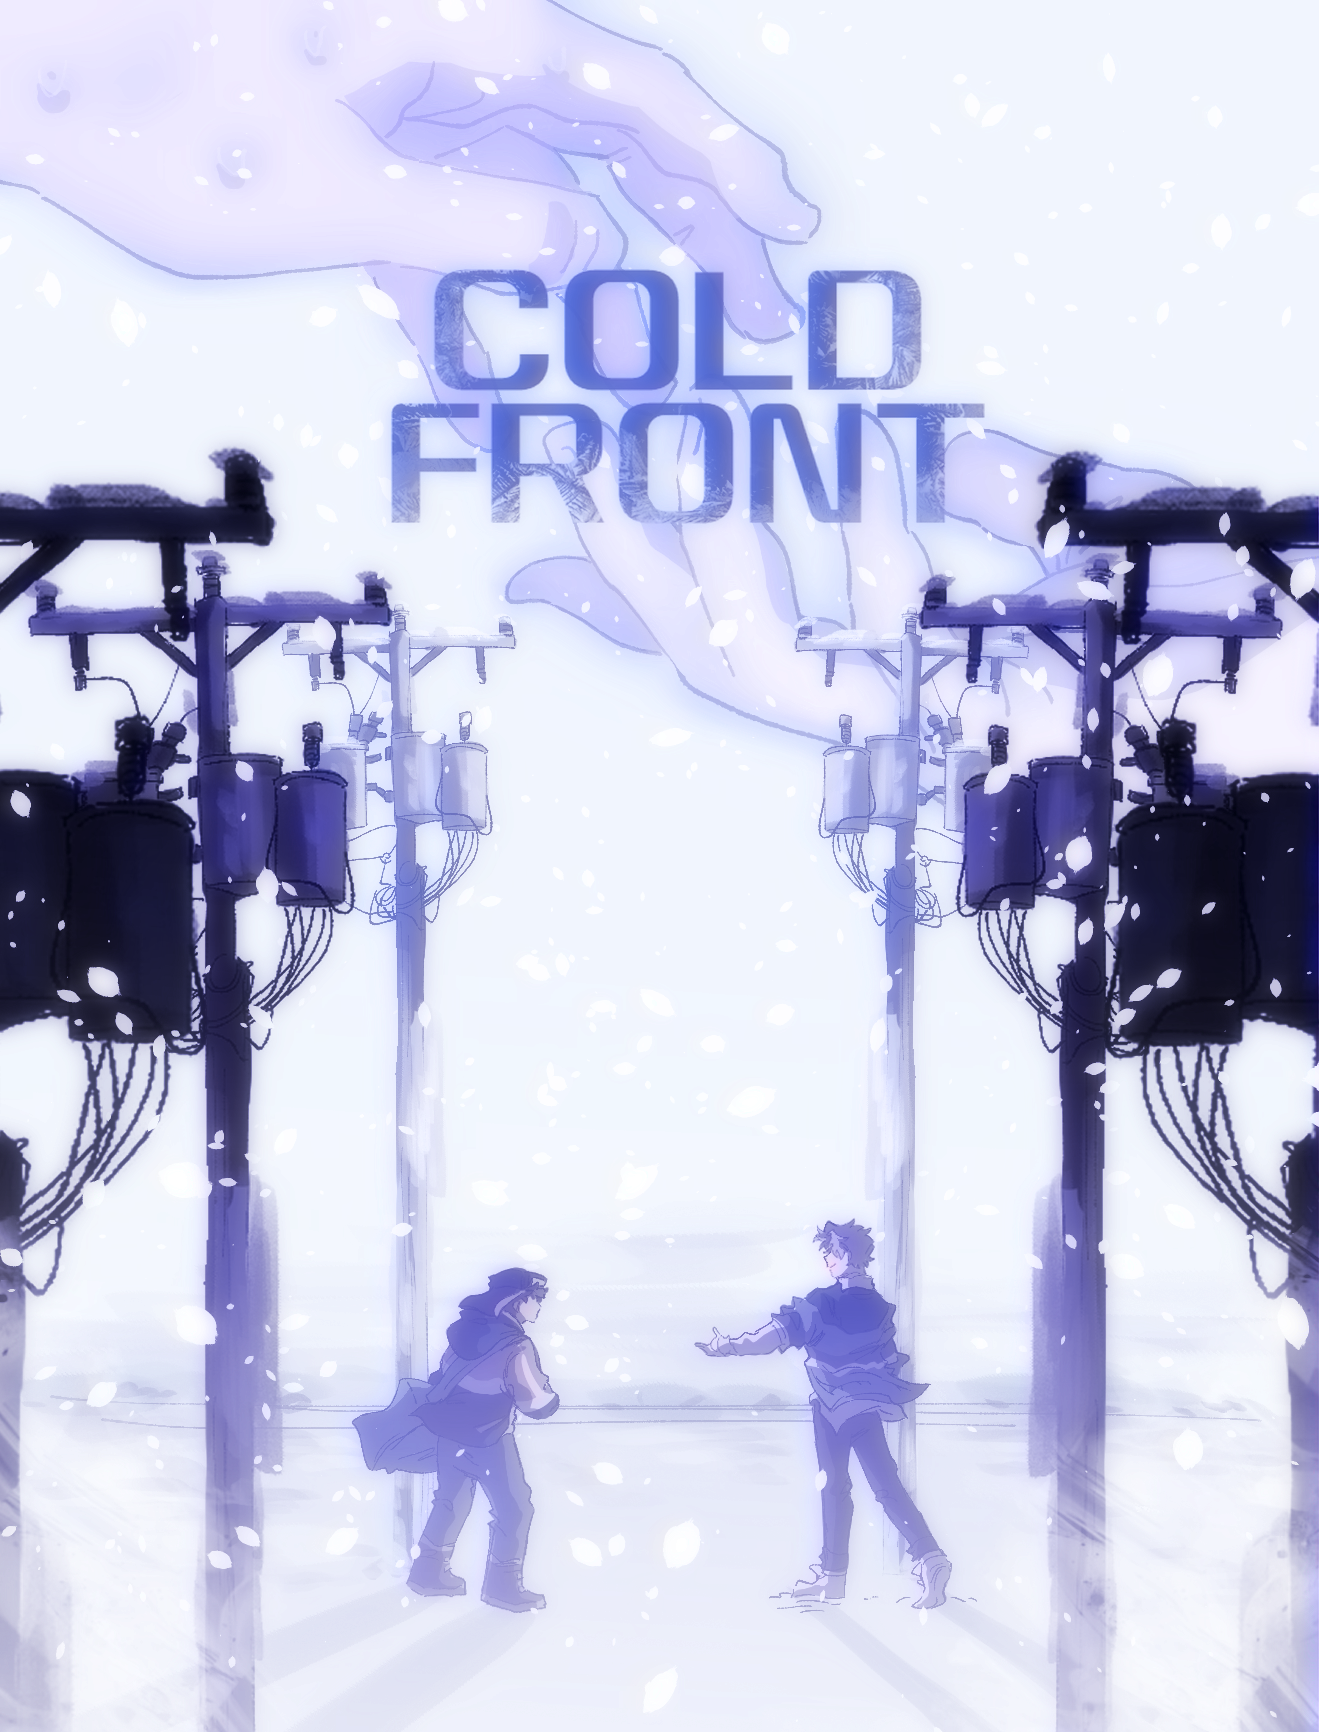 Cold Front - 2.5D RPG Horror/Narrative game about supernatural